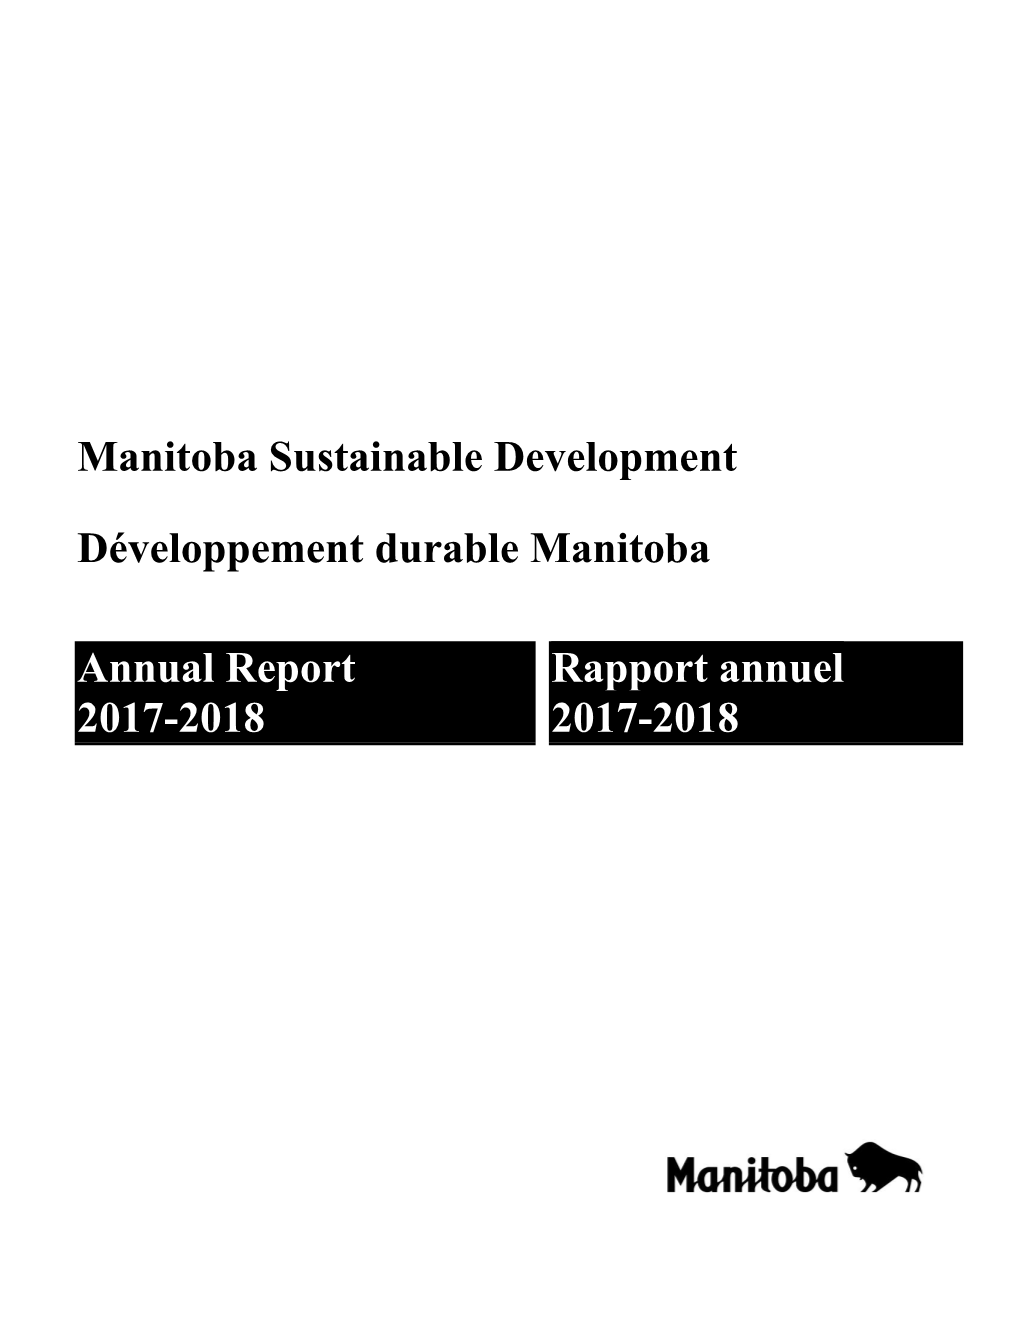 2017/18 Annual Report Sustainable Development